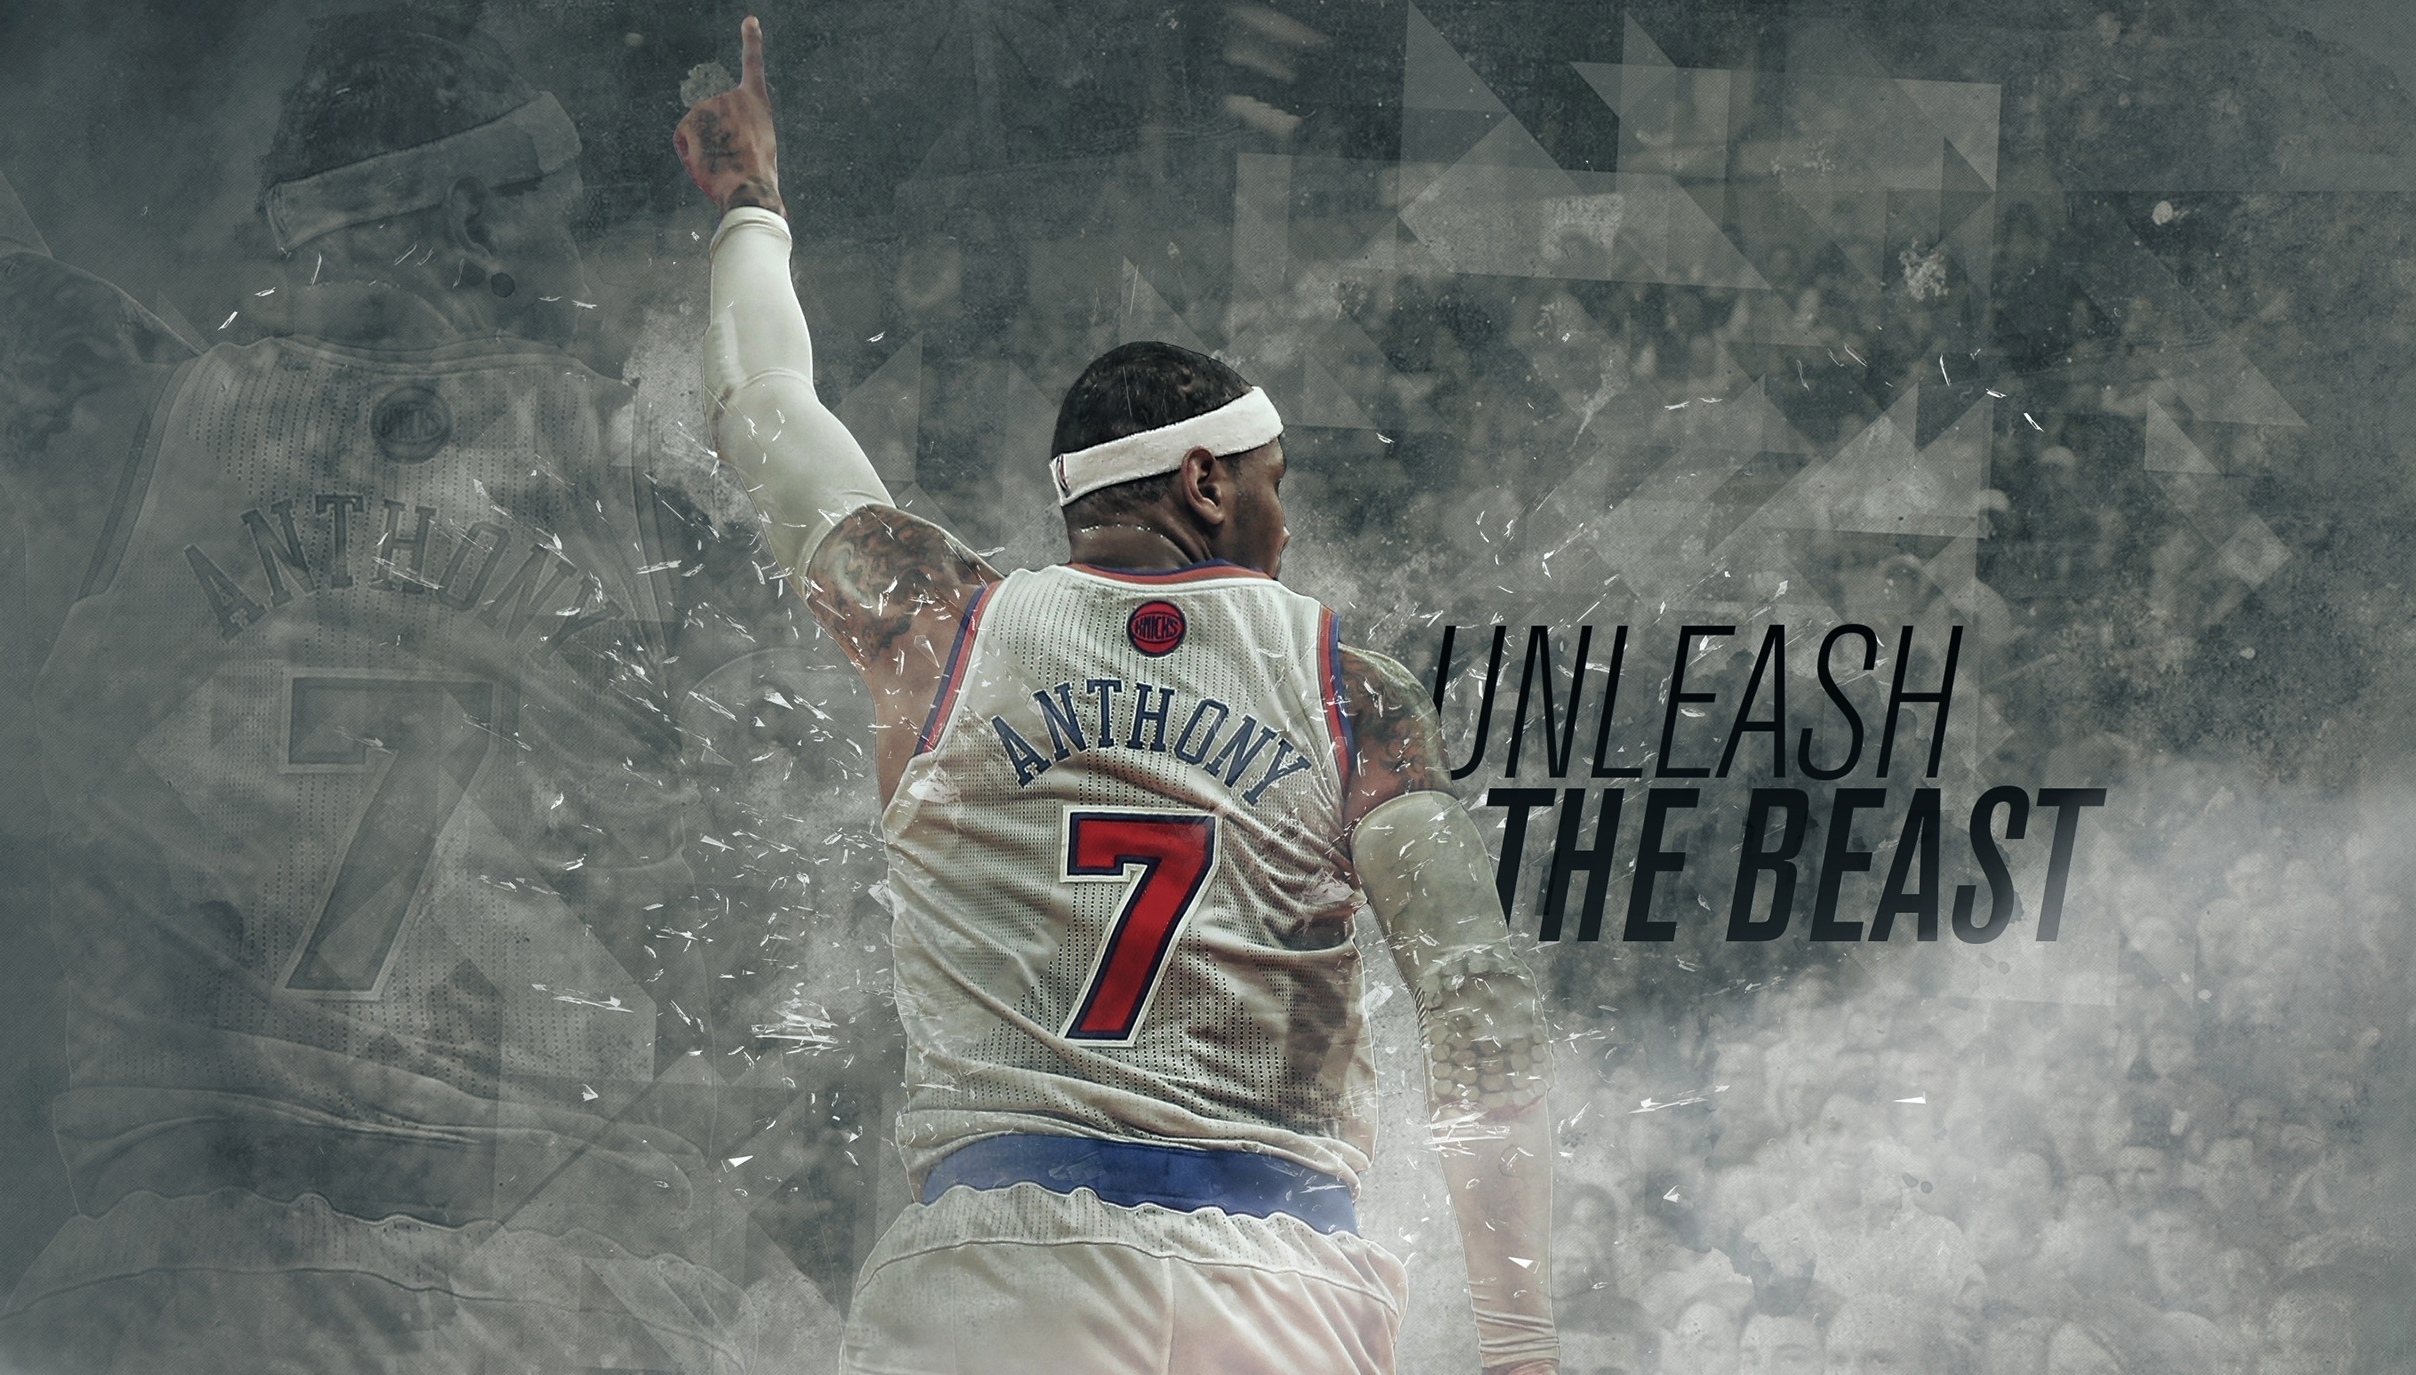 Sports Nba Carmelo Anthony New York Basketball 7 Knicks 2416x1375 px Wallpaper